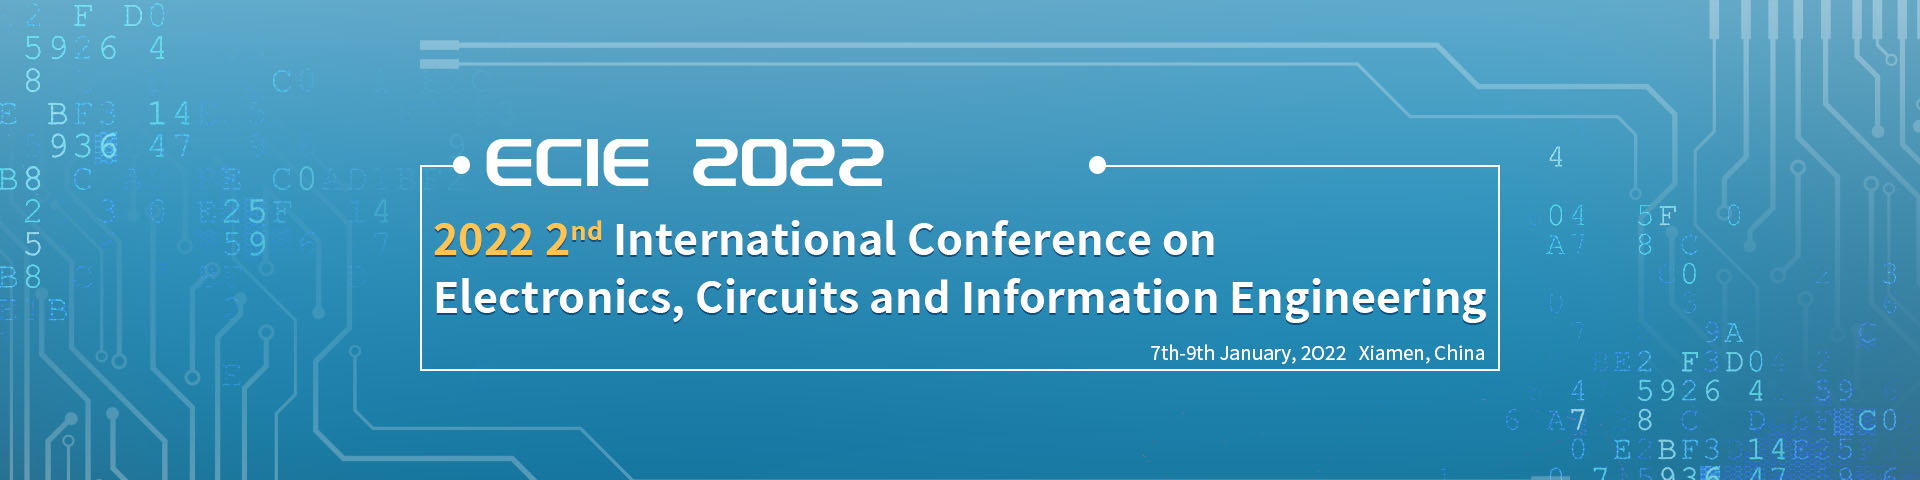 2022 2nd International Conference on Electronics, Circuits and Information Engineering (ECIE 2022), Xiamen, Fujian, China